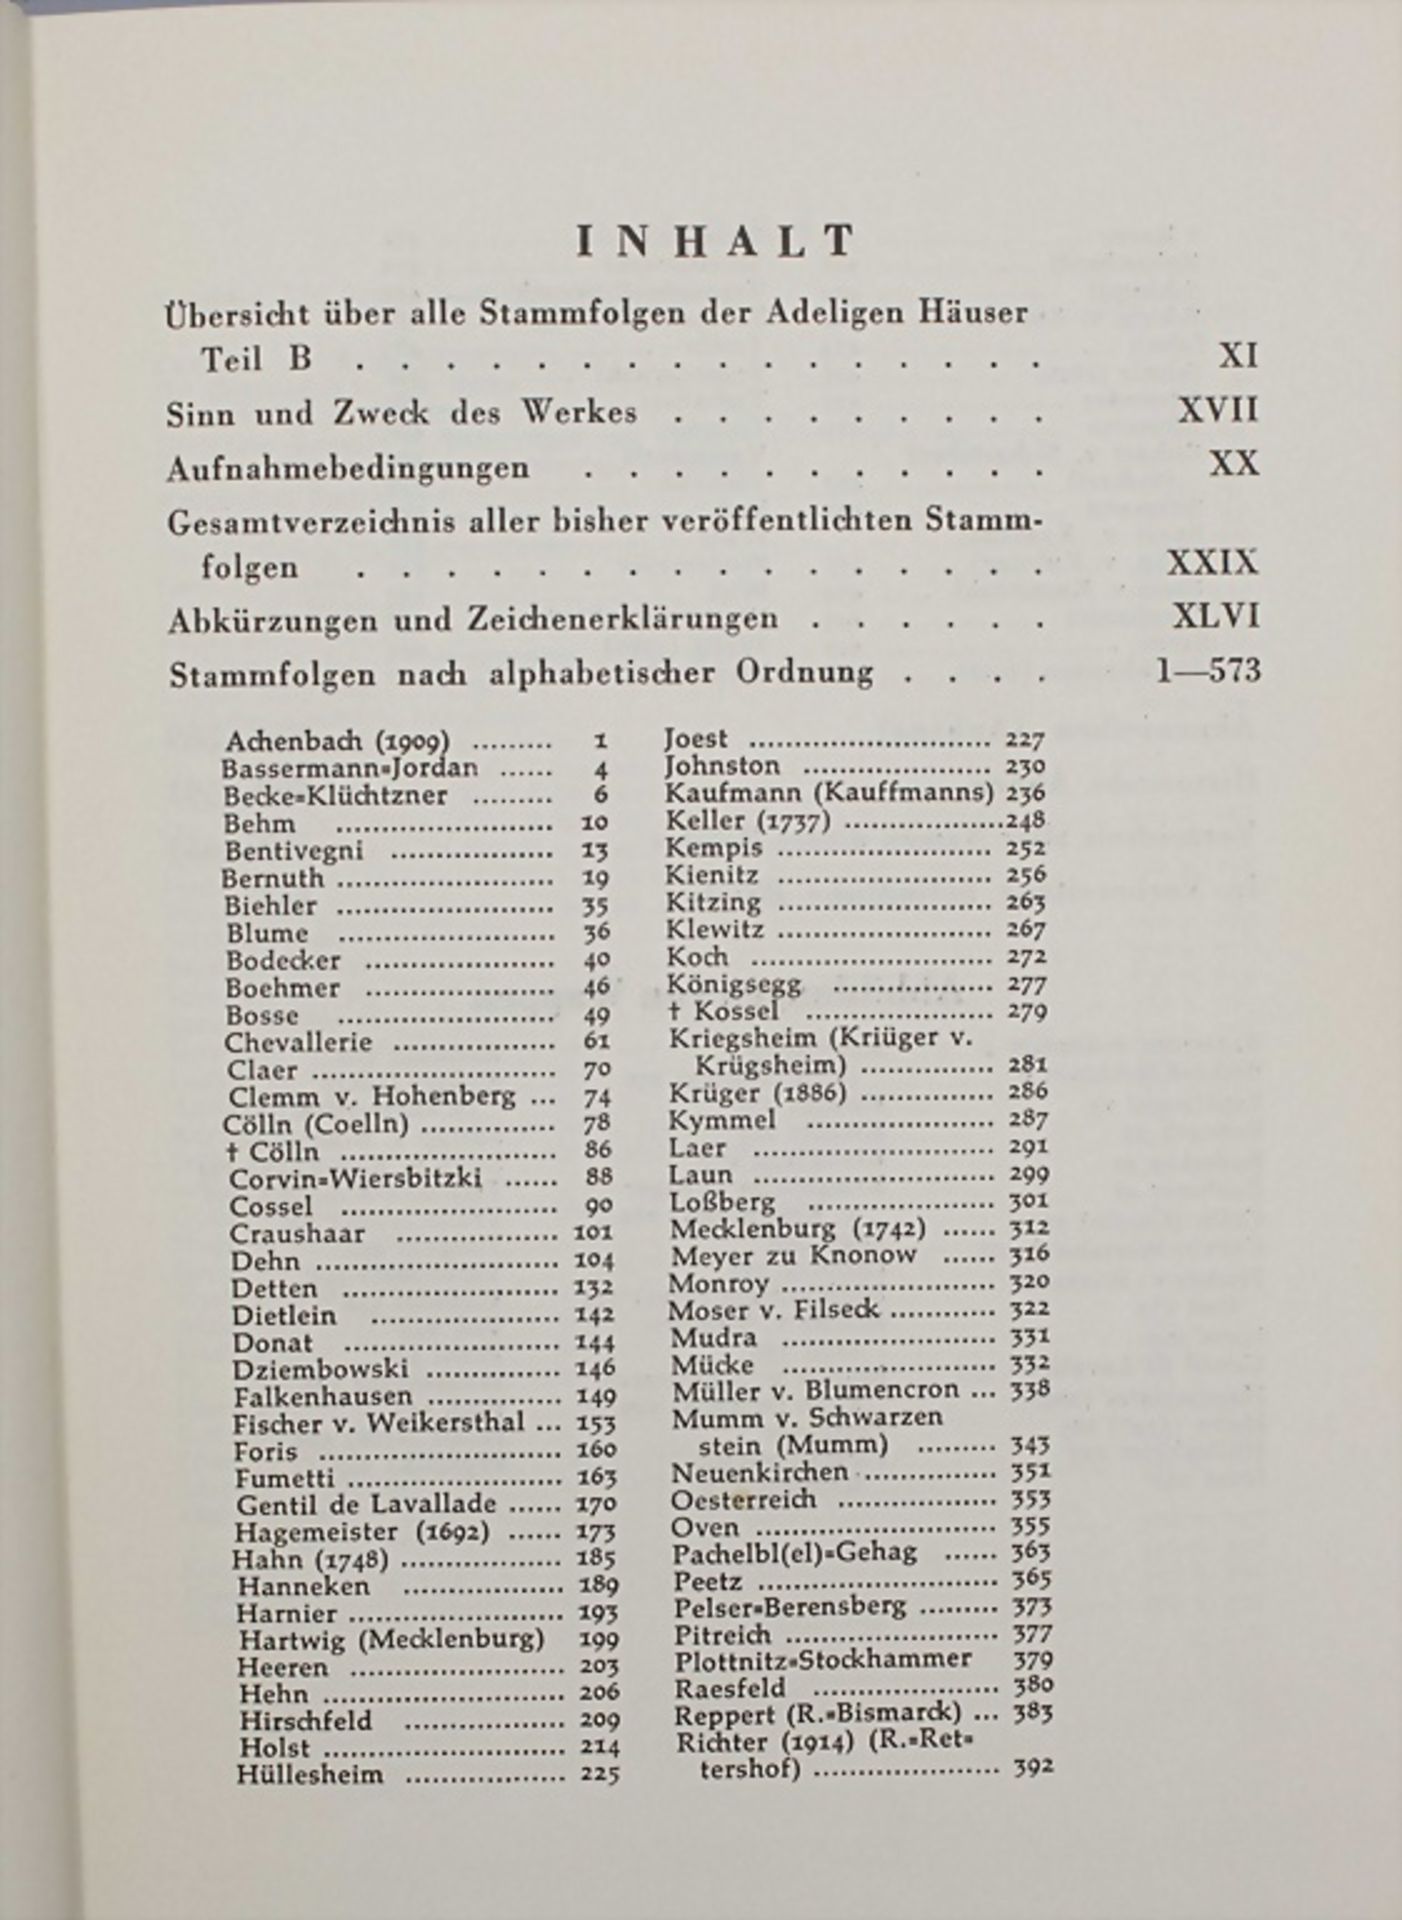 Genealogisches Handbuch des Adels Band III, Glücksburg, 1958 - Image 3 of 6